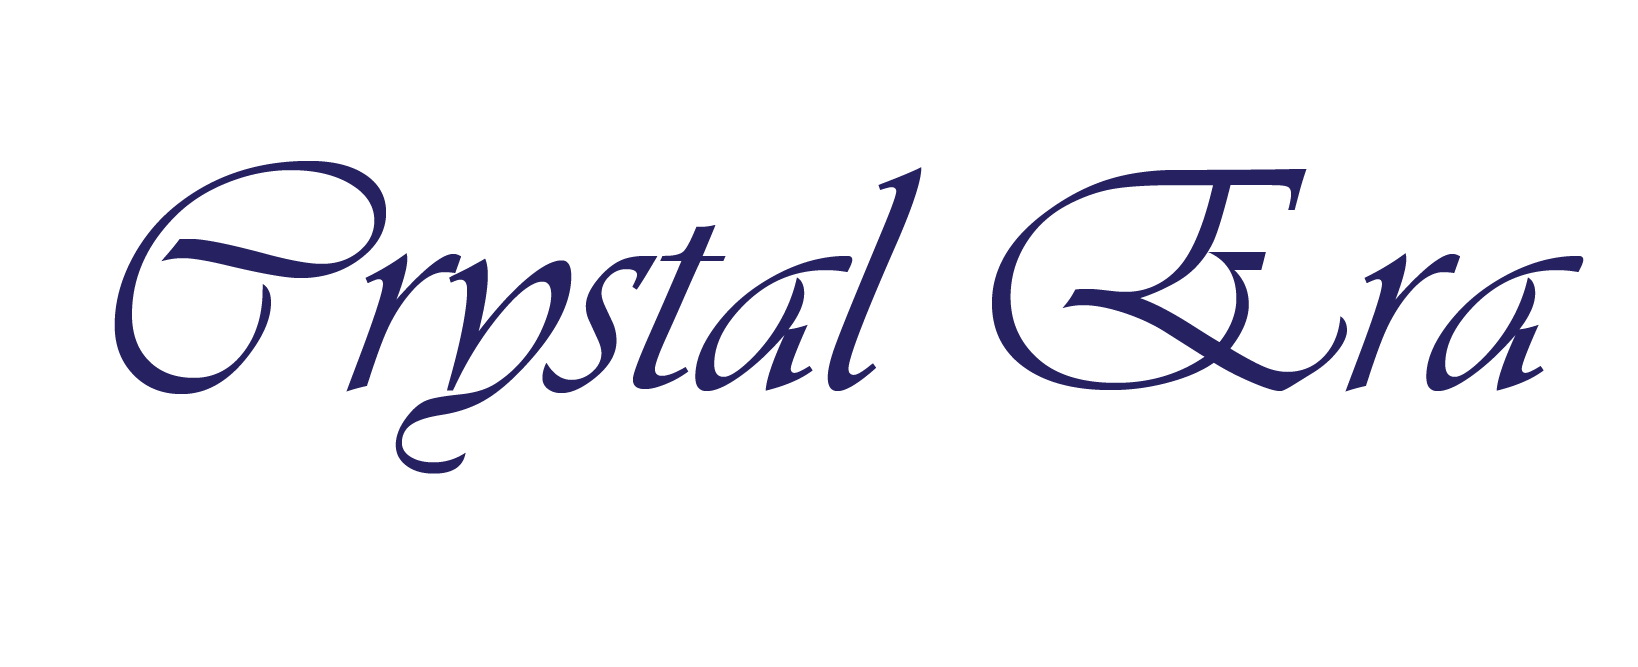 Crystal Era logo